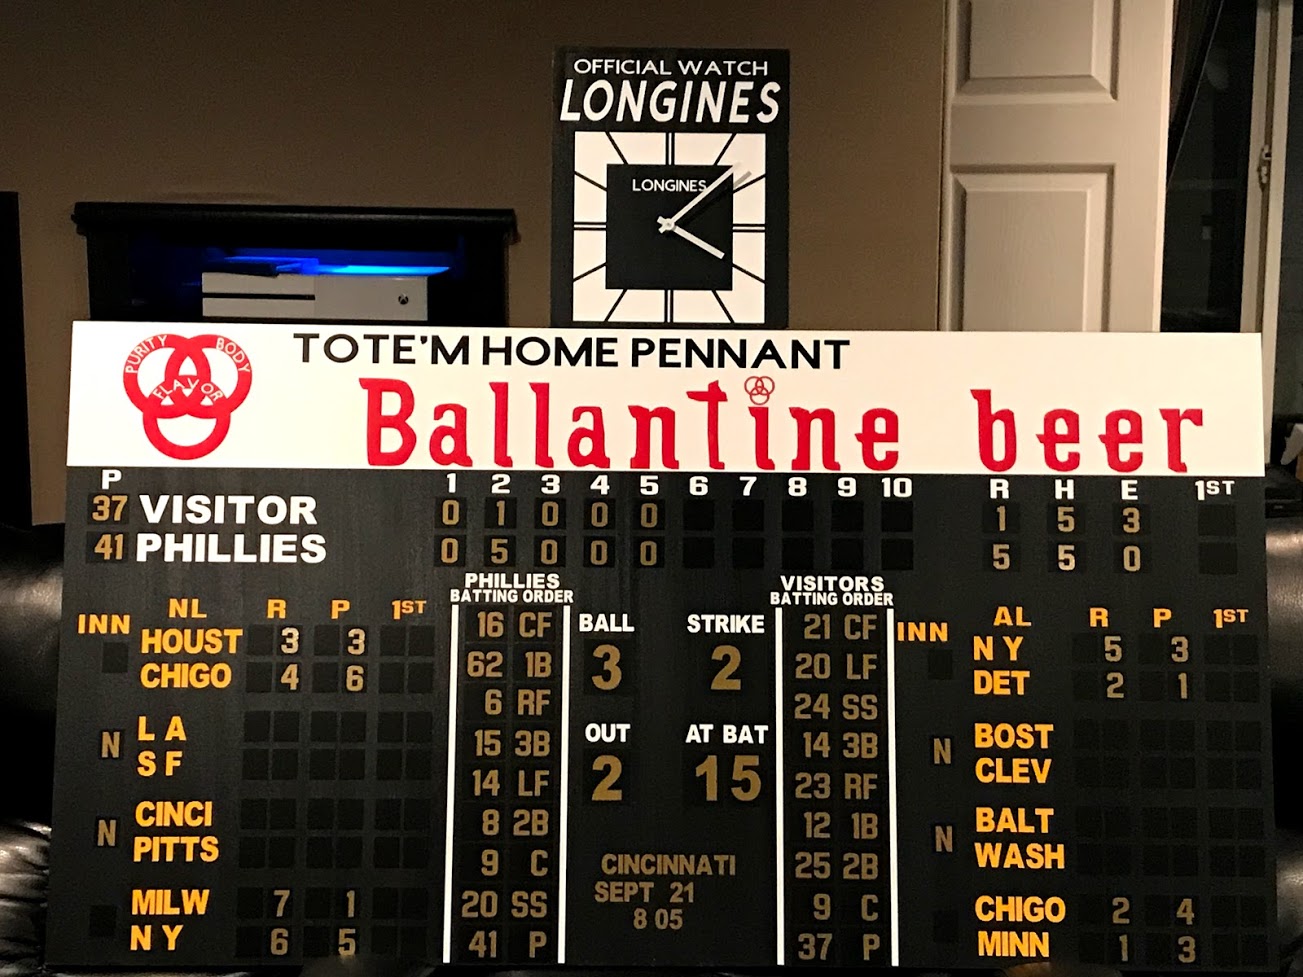 Phillies Scoreboard